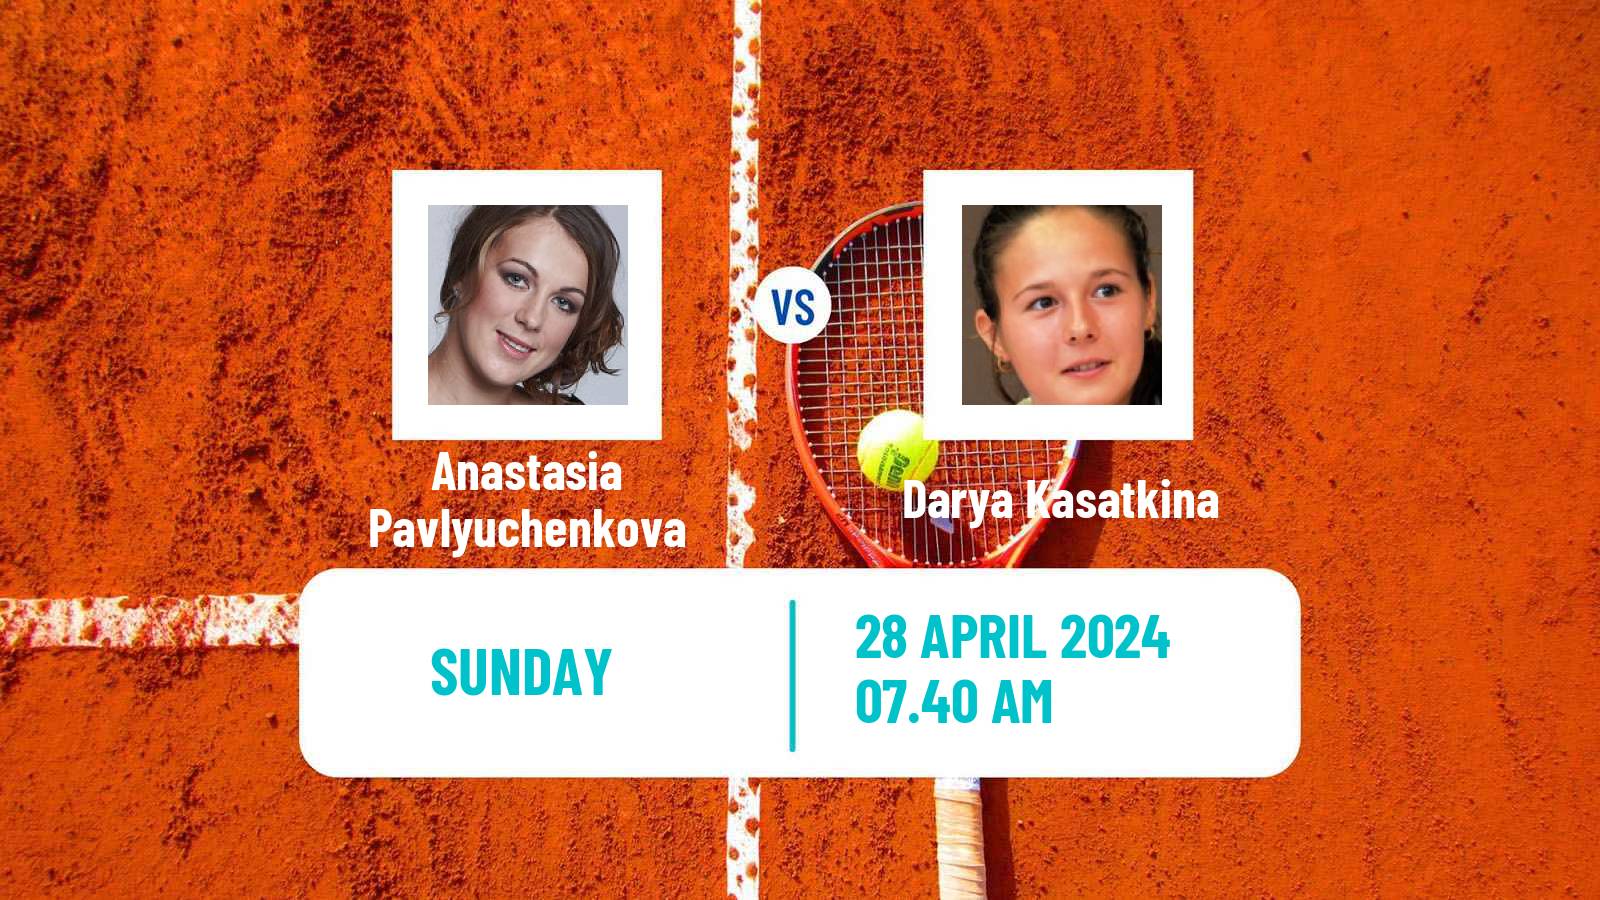 Tennis WTA Madrid Anastasia Pavlyuchenkova - Darya Kasatkina